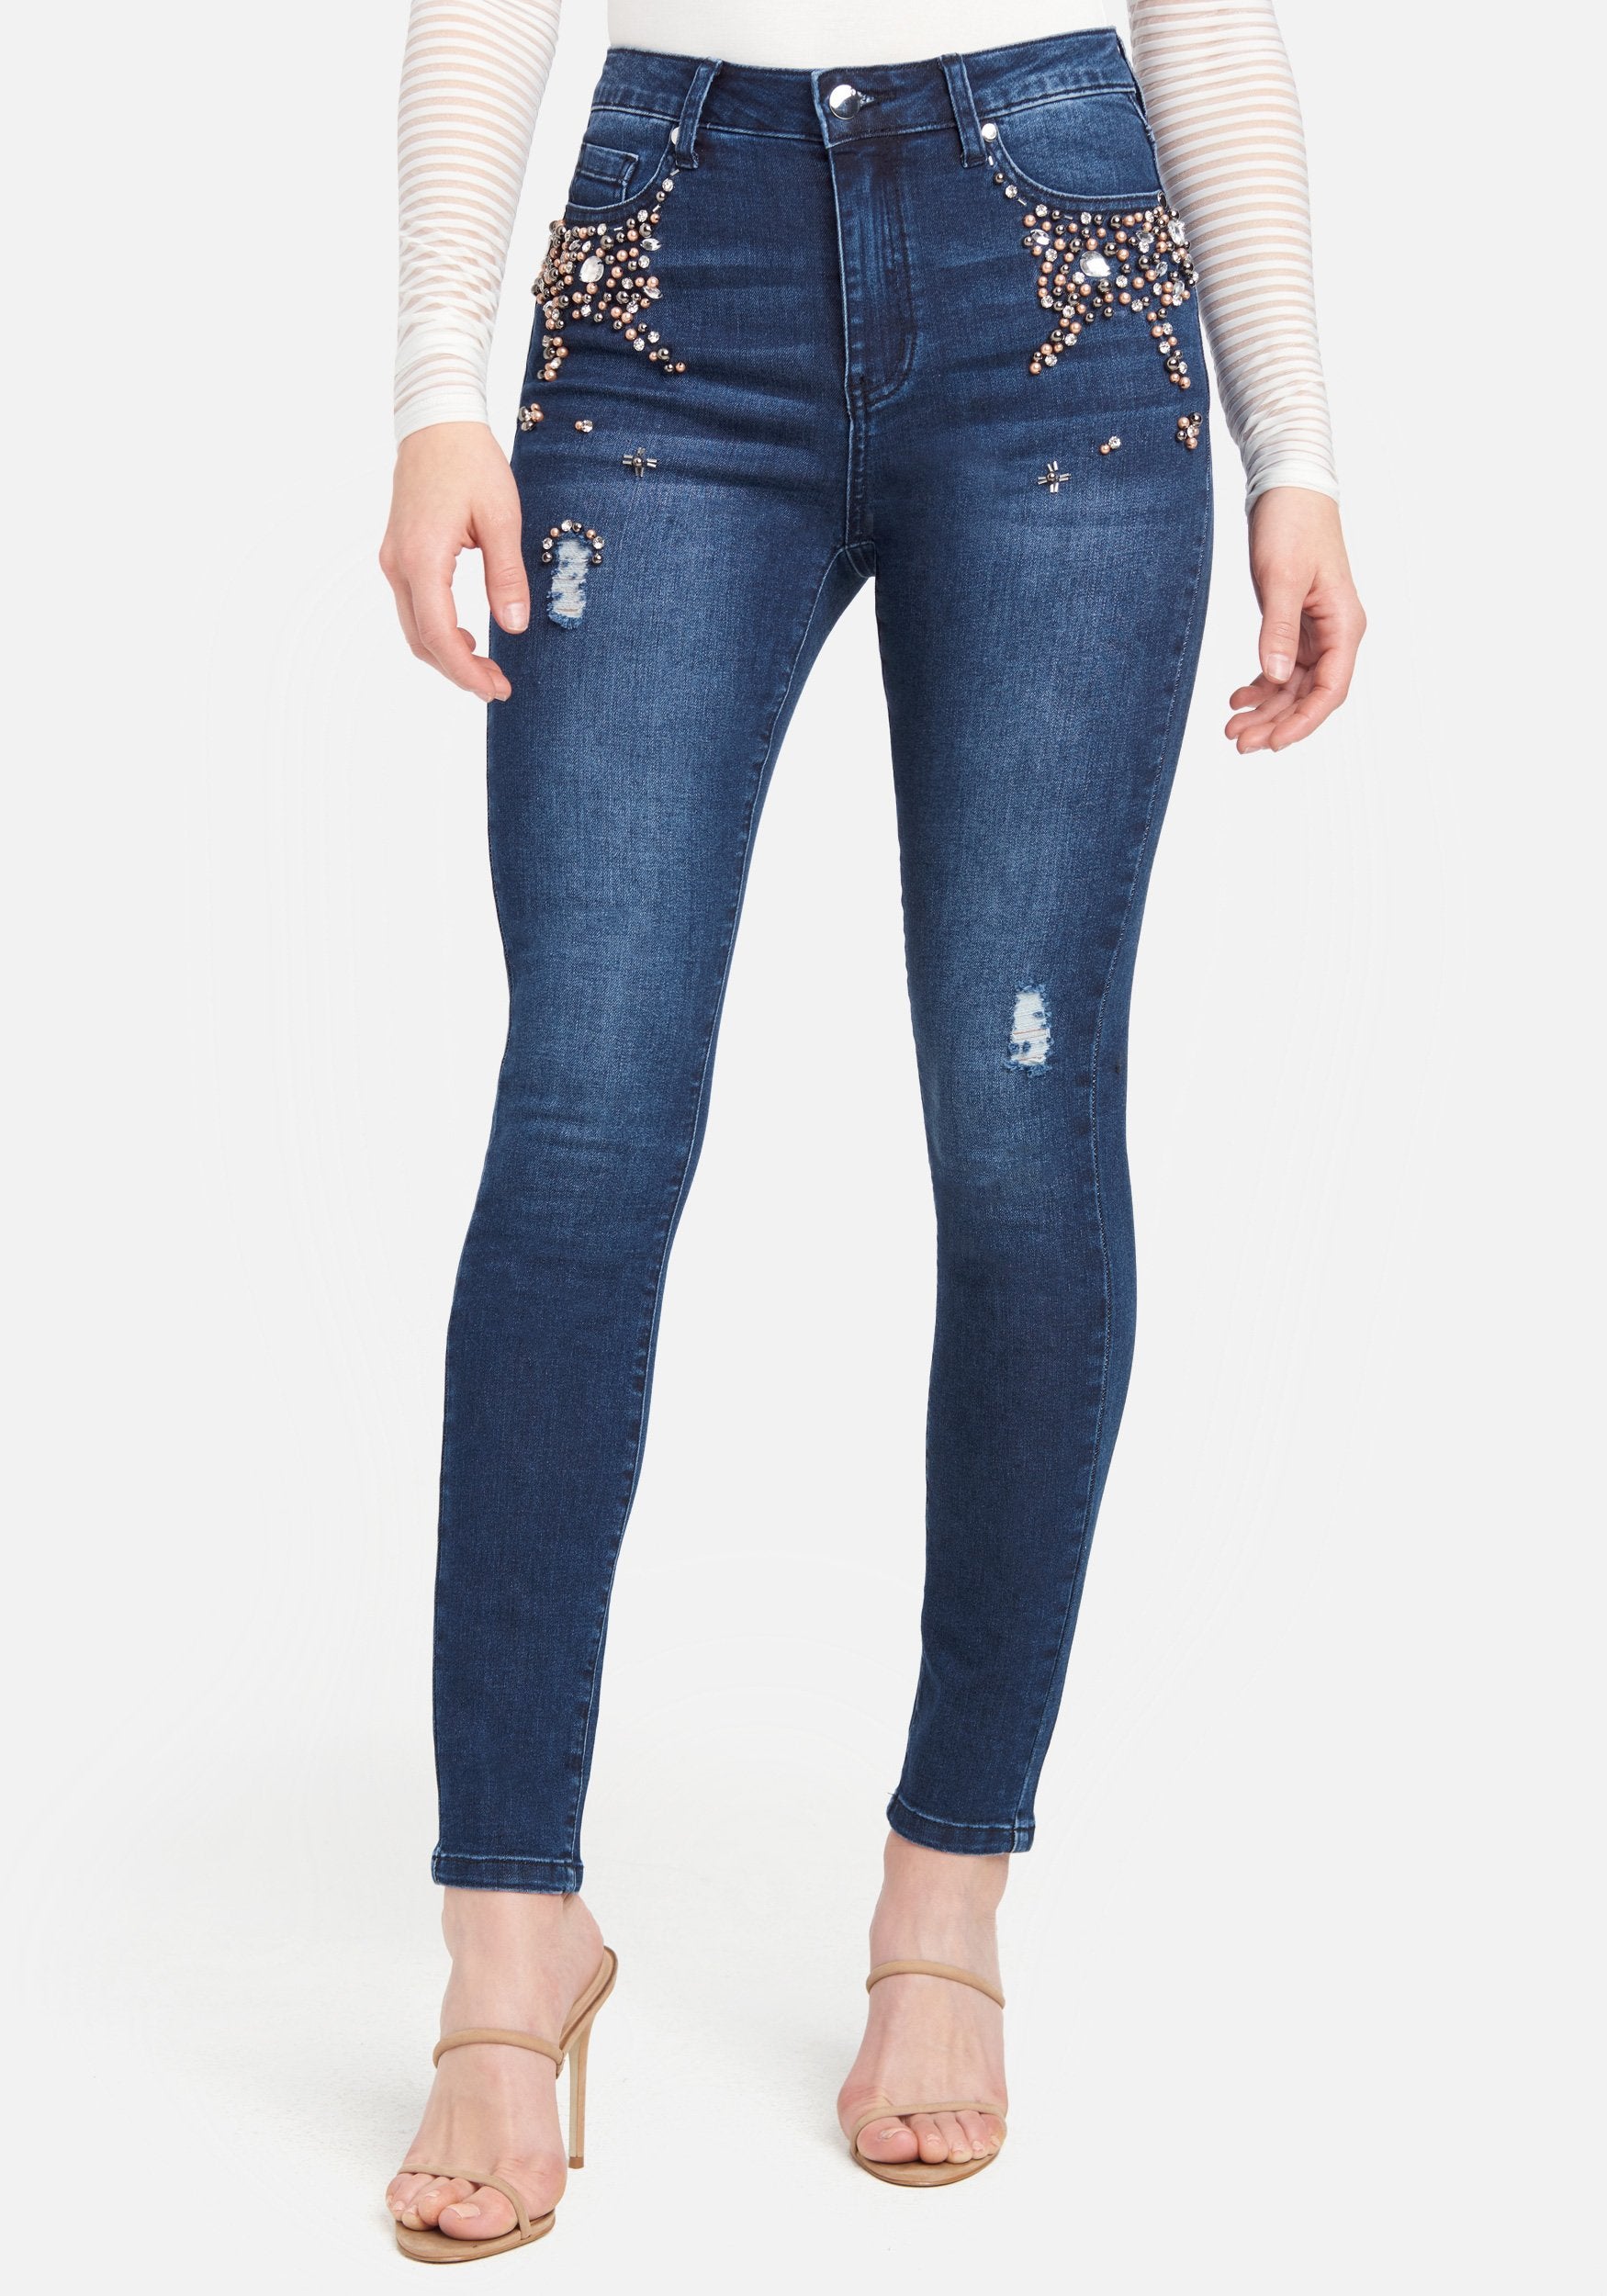 Bebe Women's Pearl And Rhinestone Skinny Jeans, Size 32 in Medium Indigo Wash Cotton/Spandex